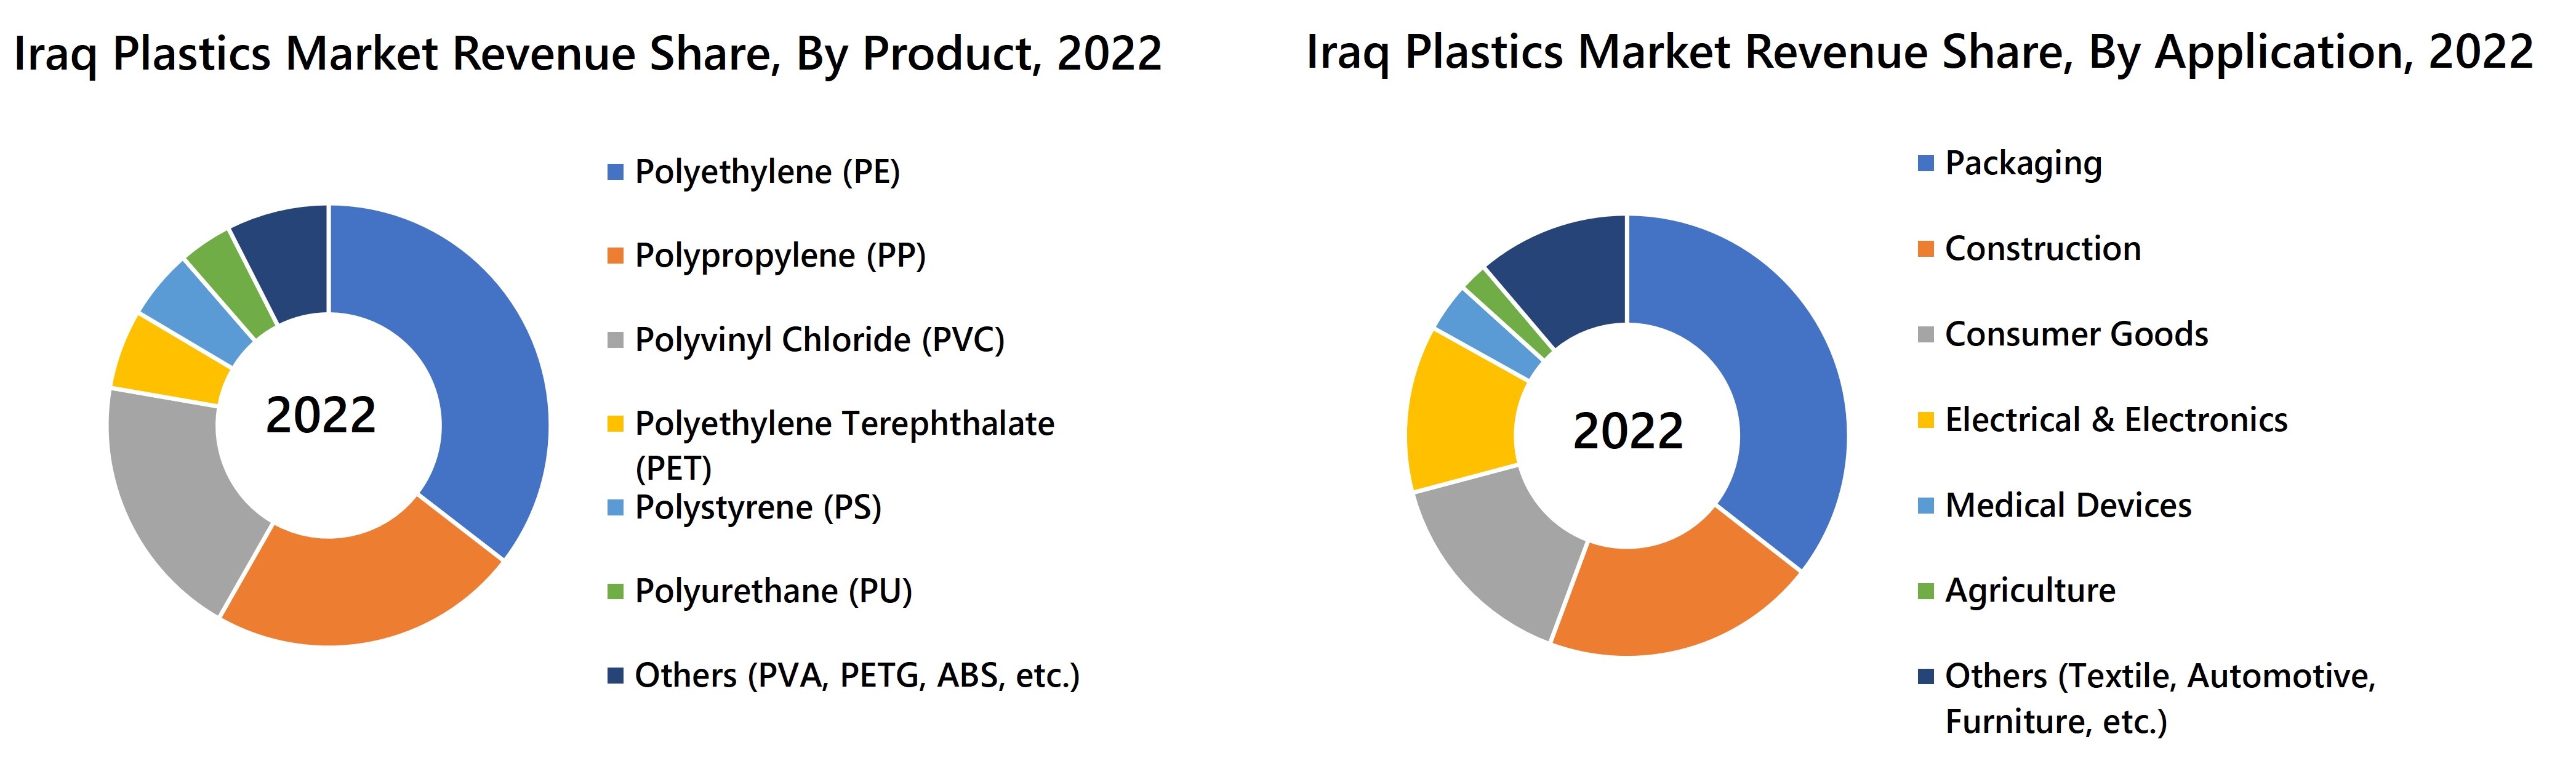 Iraq Plastics Market Revenue Share